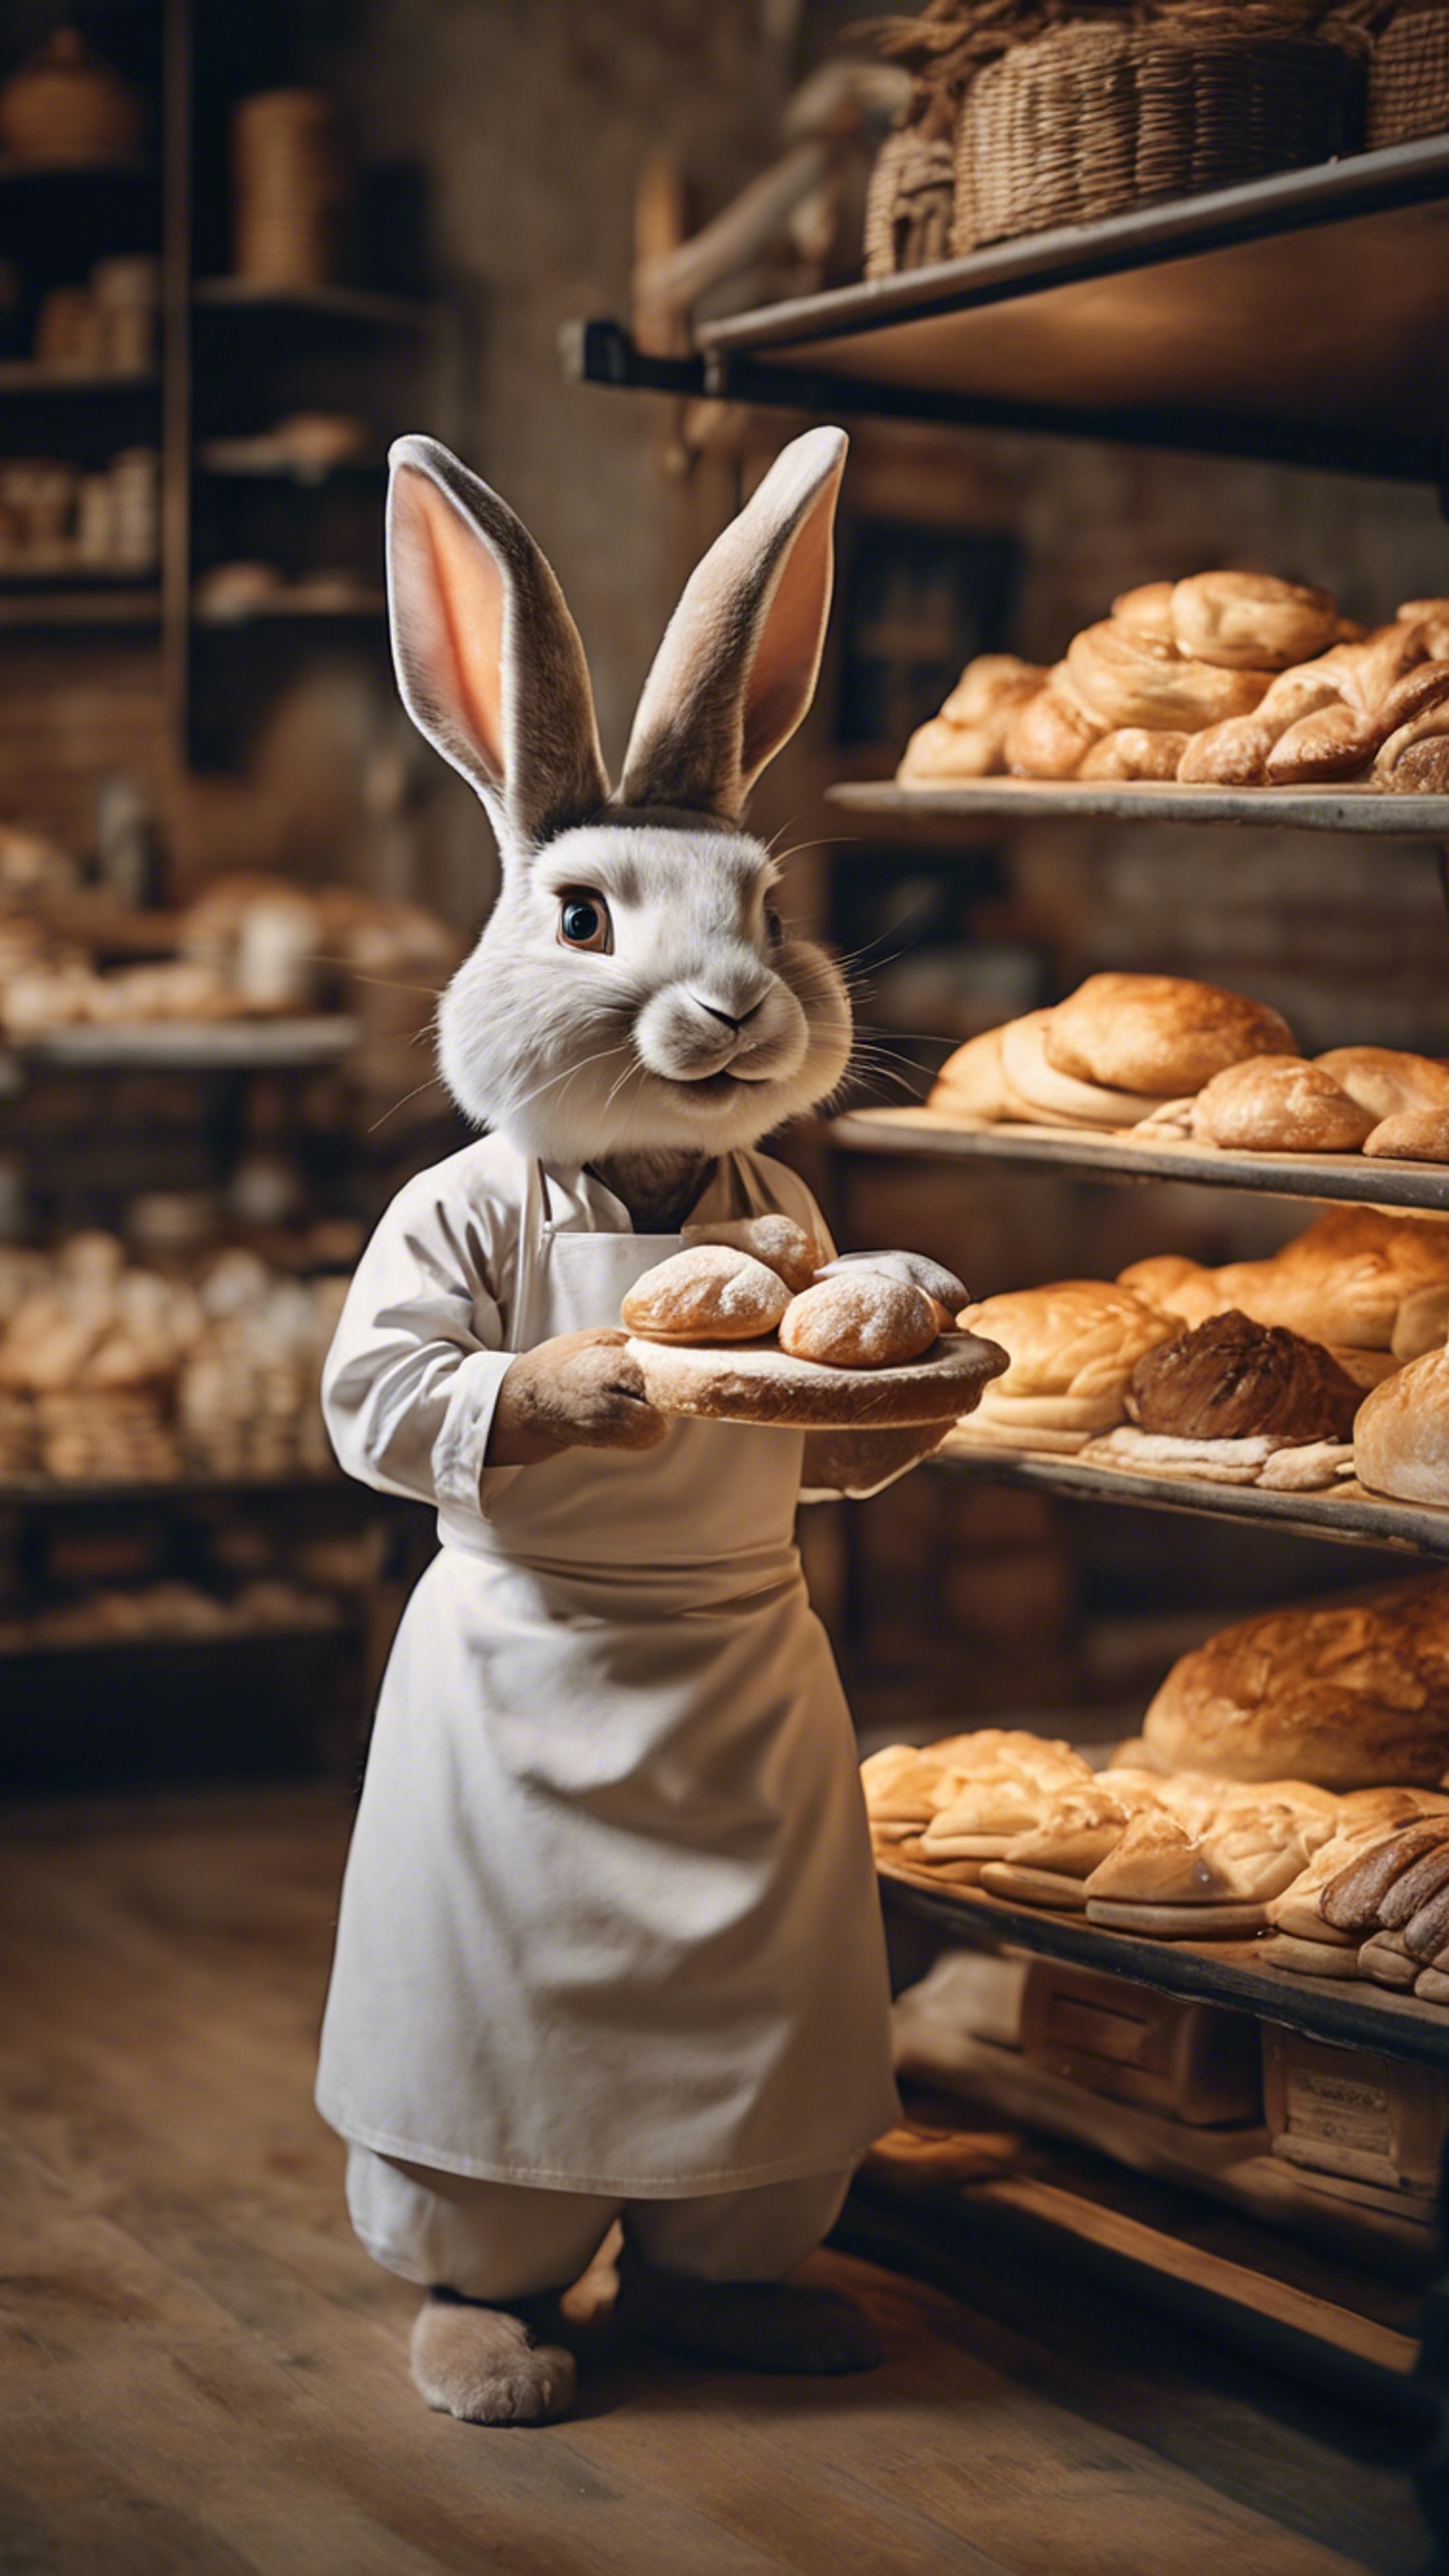 A rabbit baker displaying freshly-baked goods in a charming bakery. Tapeta[908b61b6762c4c248f7e]